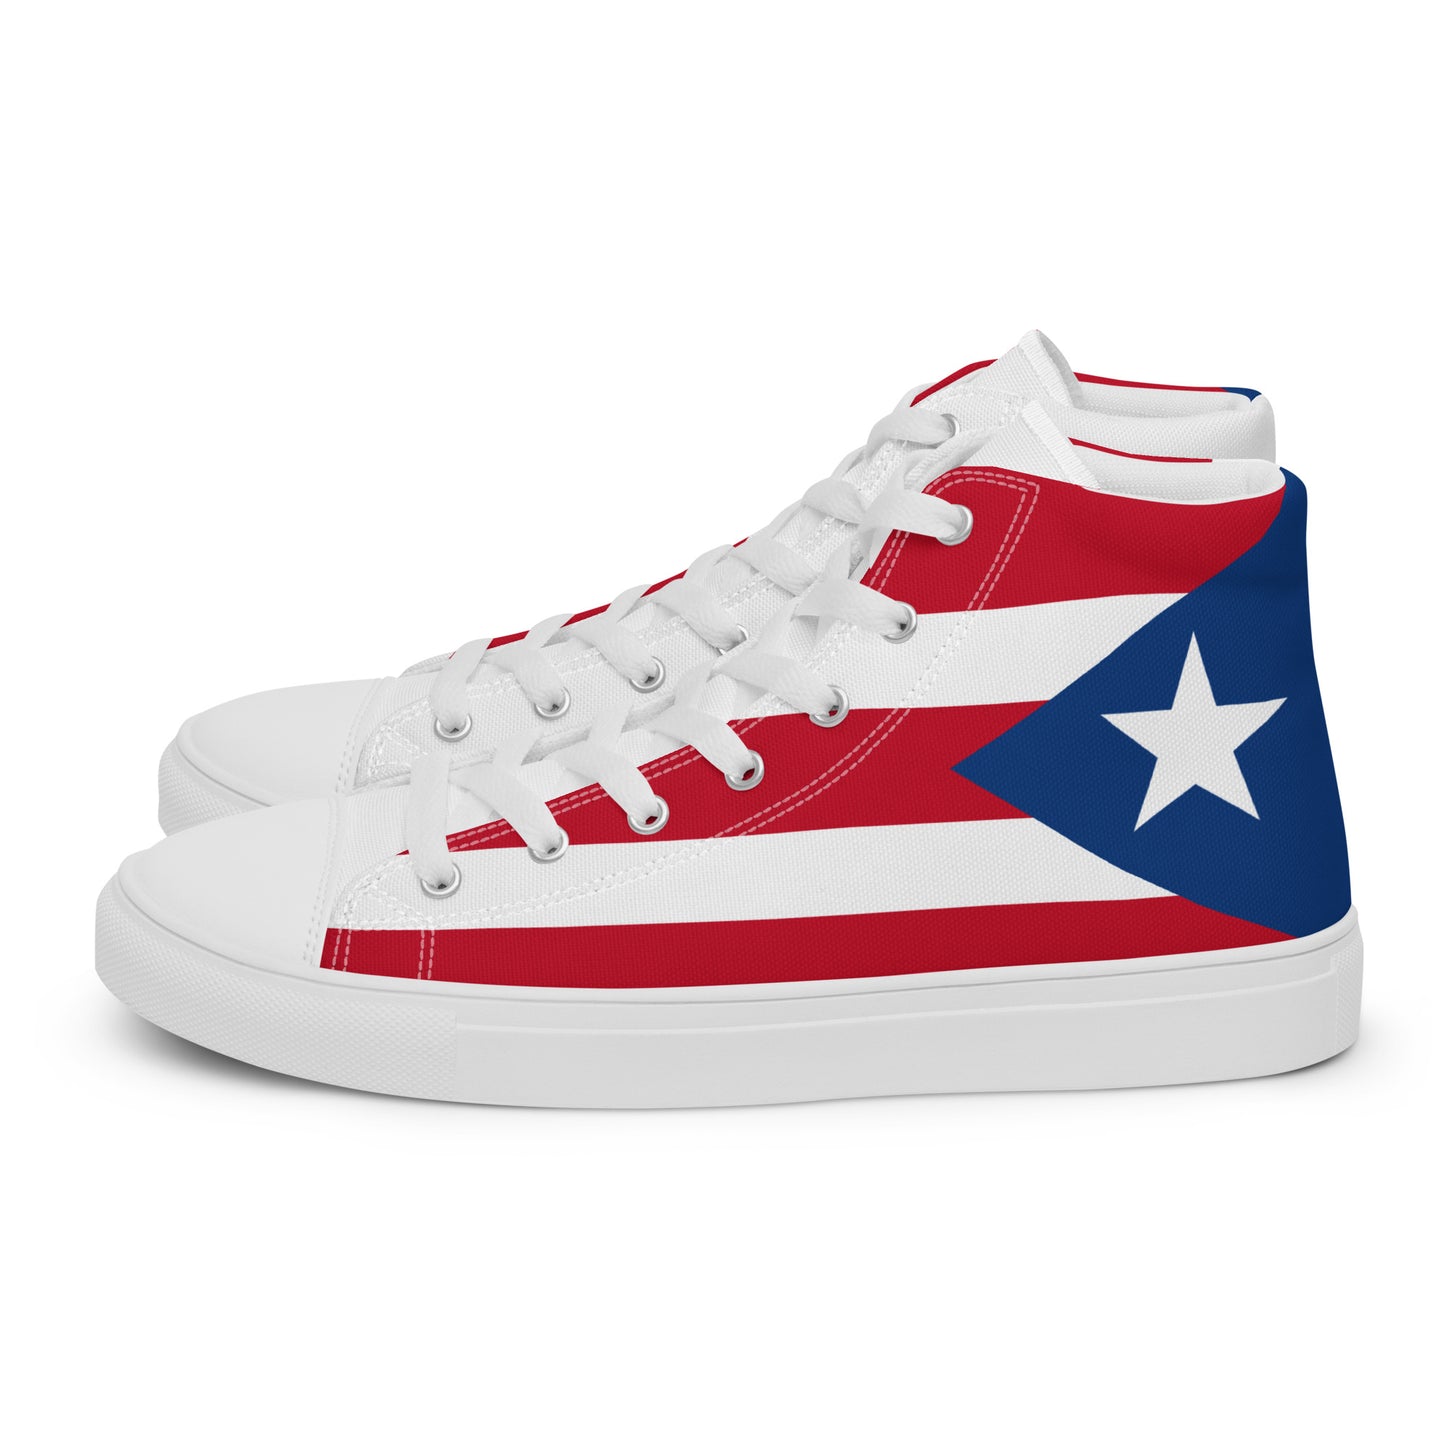 Puerto Rico - Mujer - Bandera - Zapatos High top